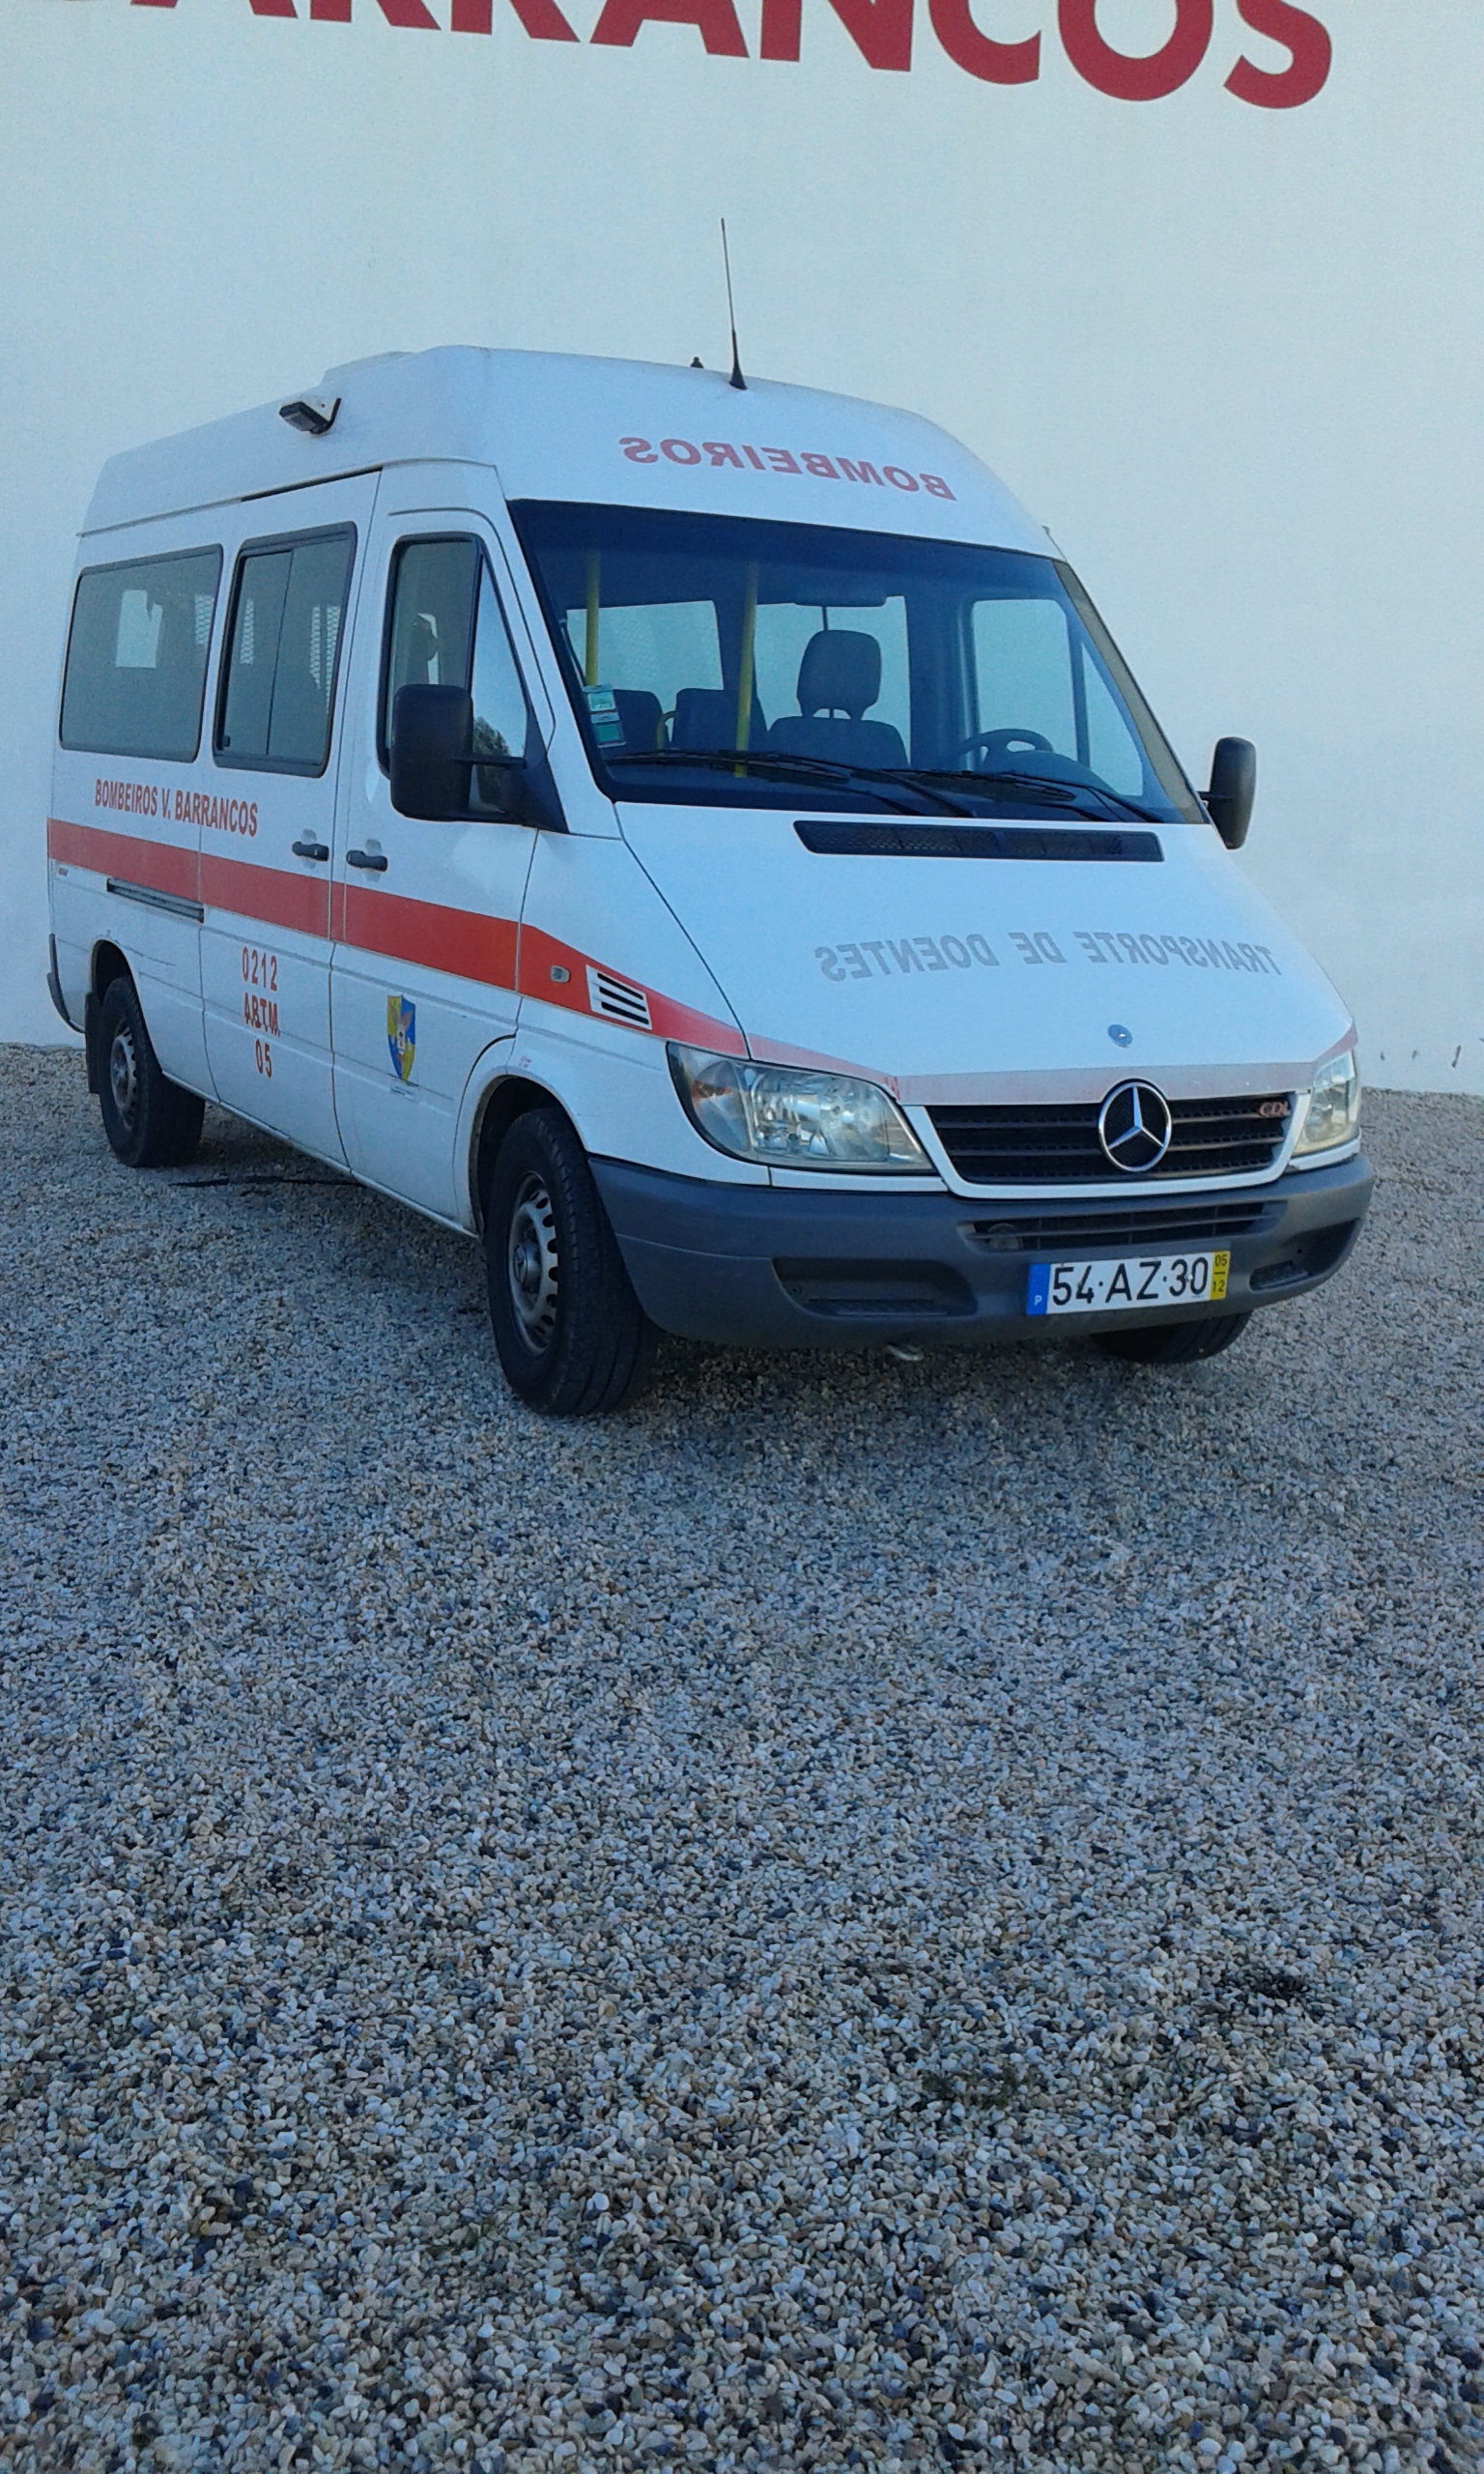 ABTM 05 - Ambulância de Transporte Múltiplo - Tipo A2